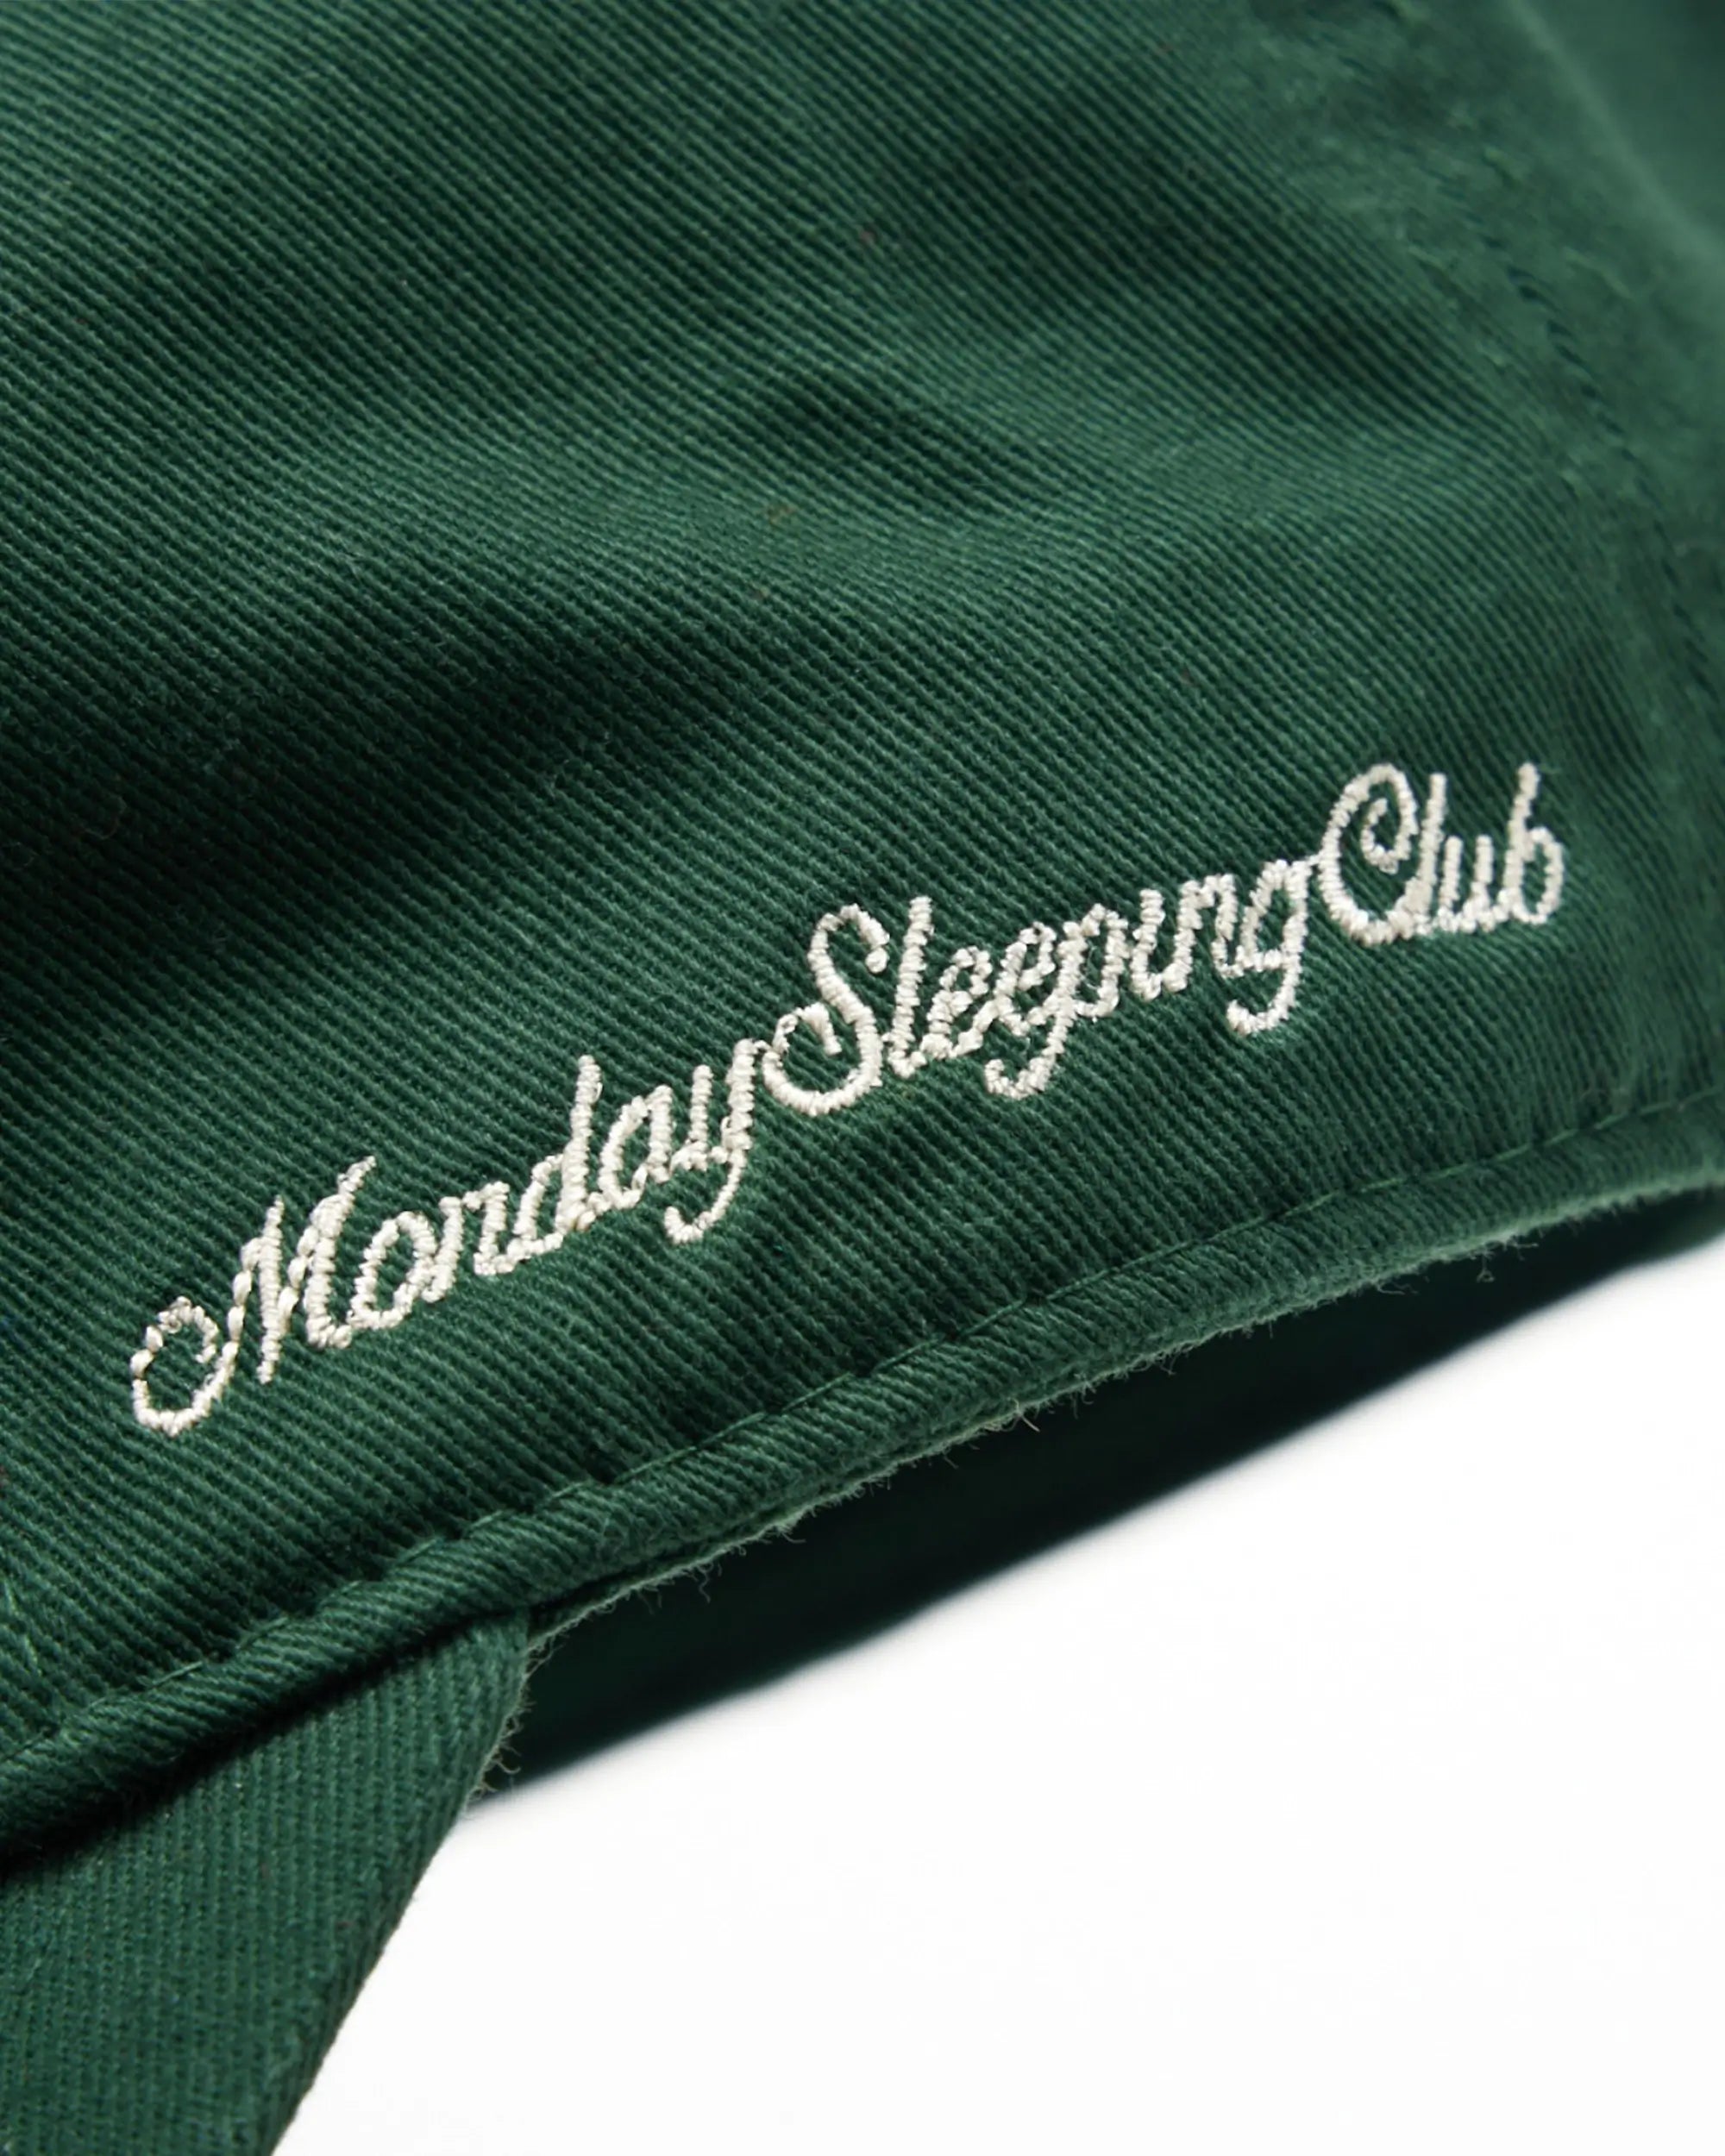 Monday Sleeping Club Initials Embroidered Baseball Cap